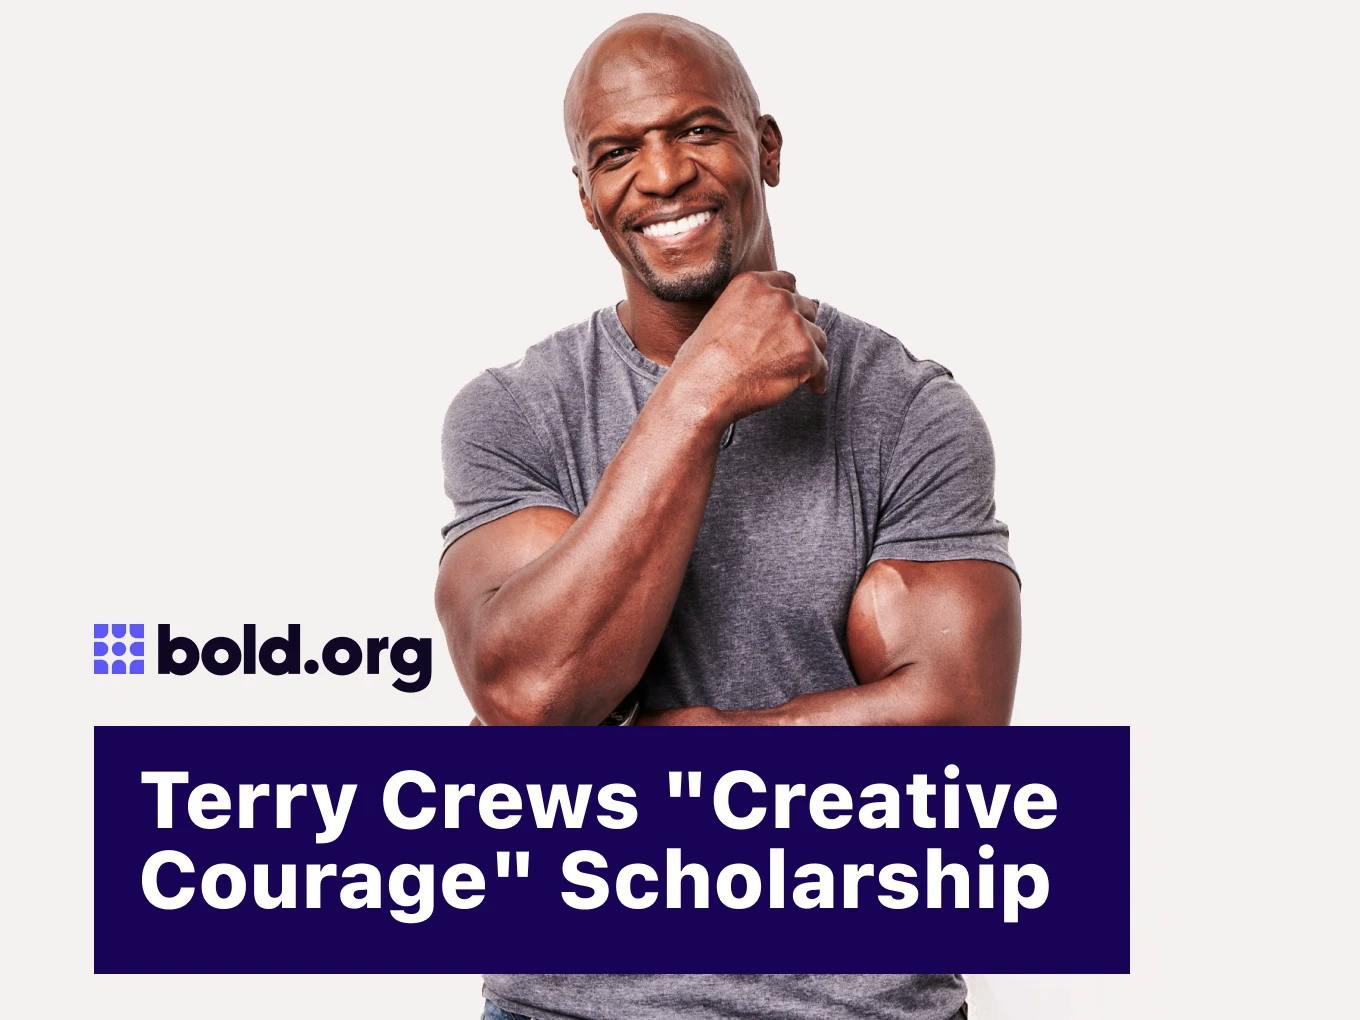 Terry Crews "Creative Courage" Scholarship